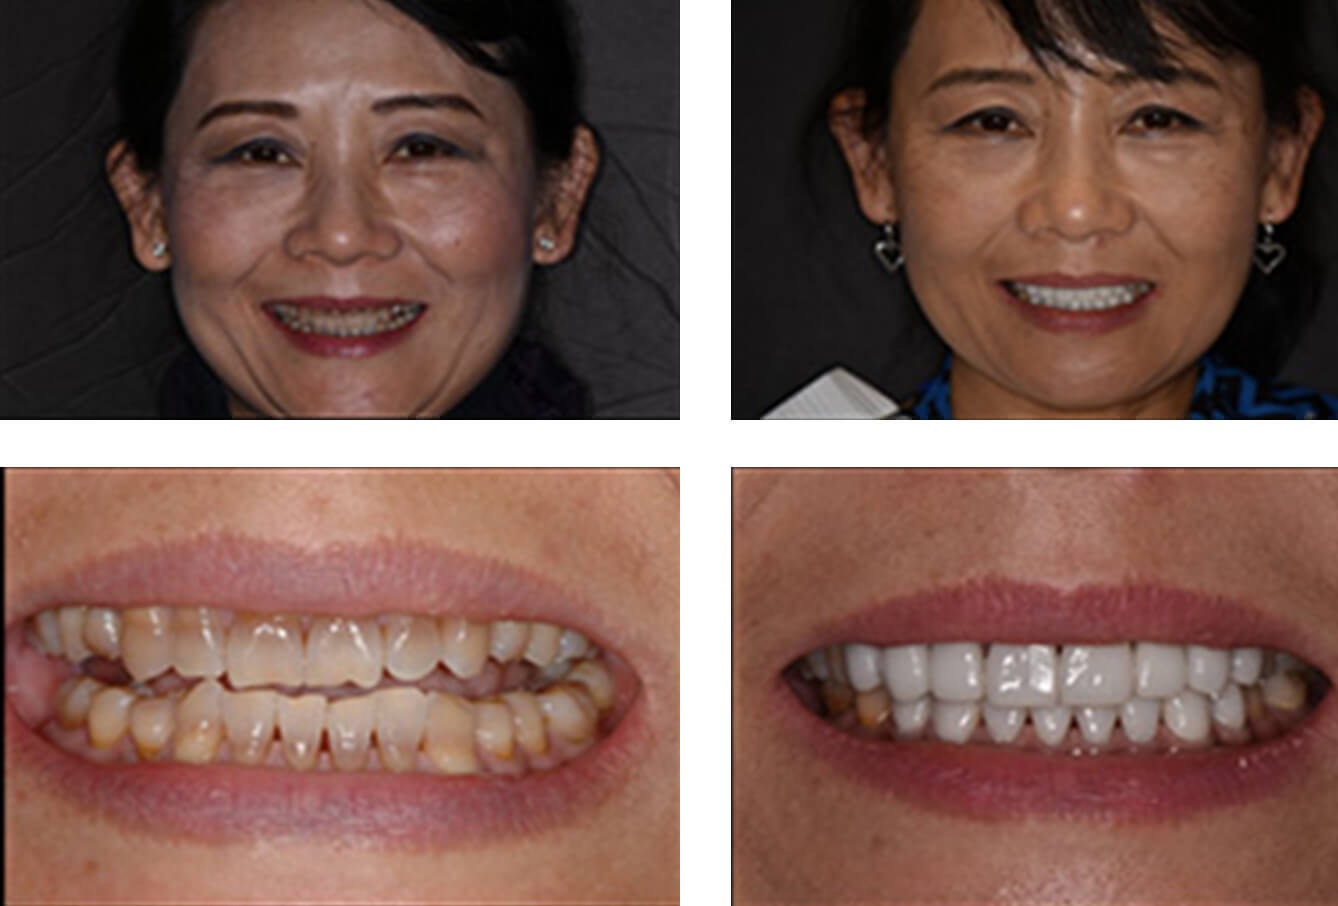 Smile transformation collage